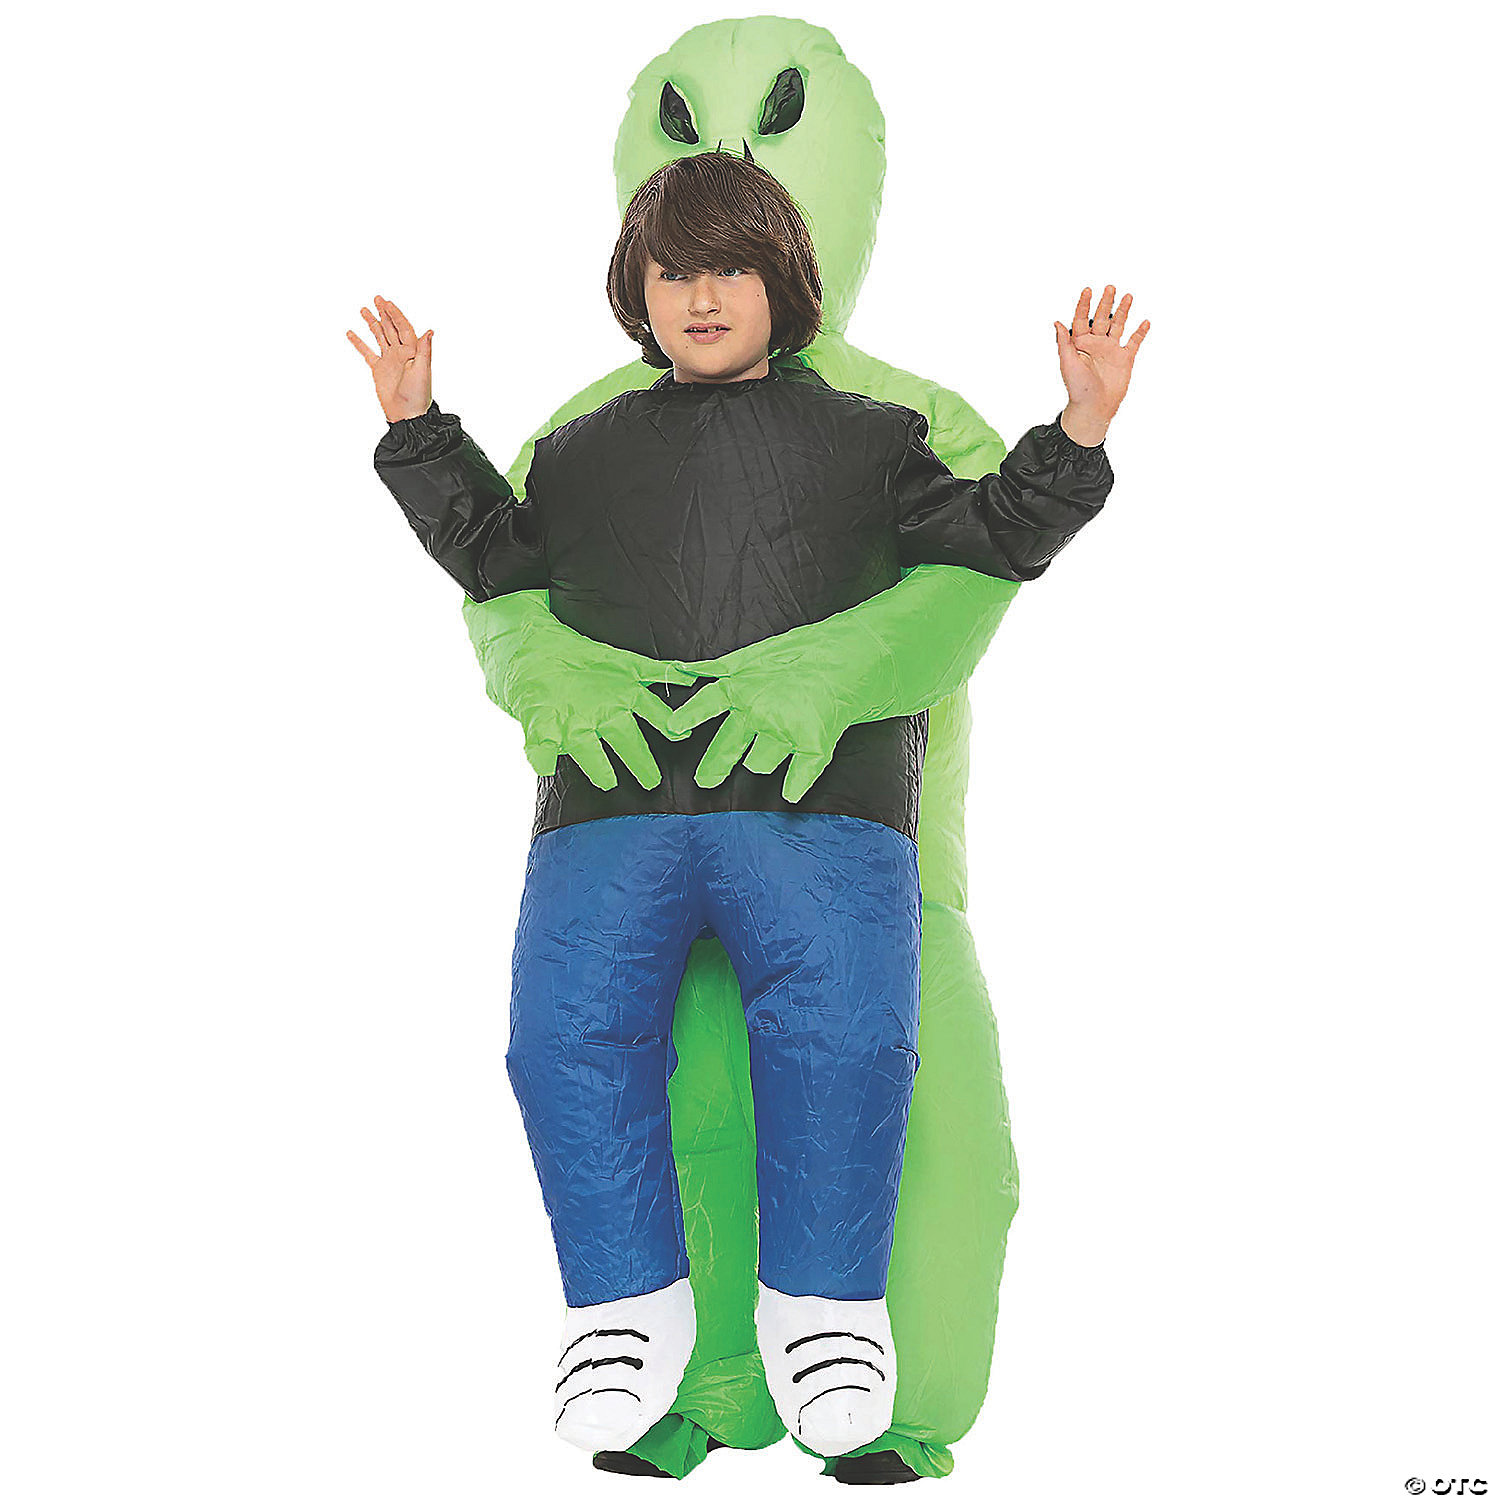 Kids Inflatable Alien Costume